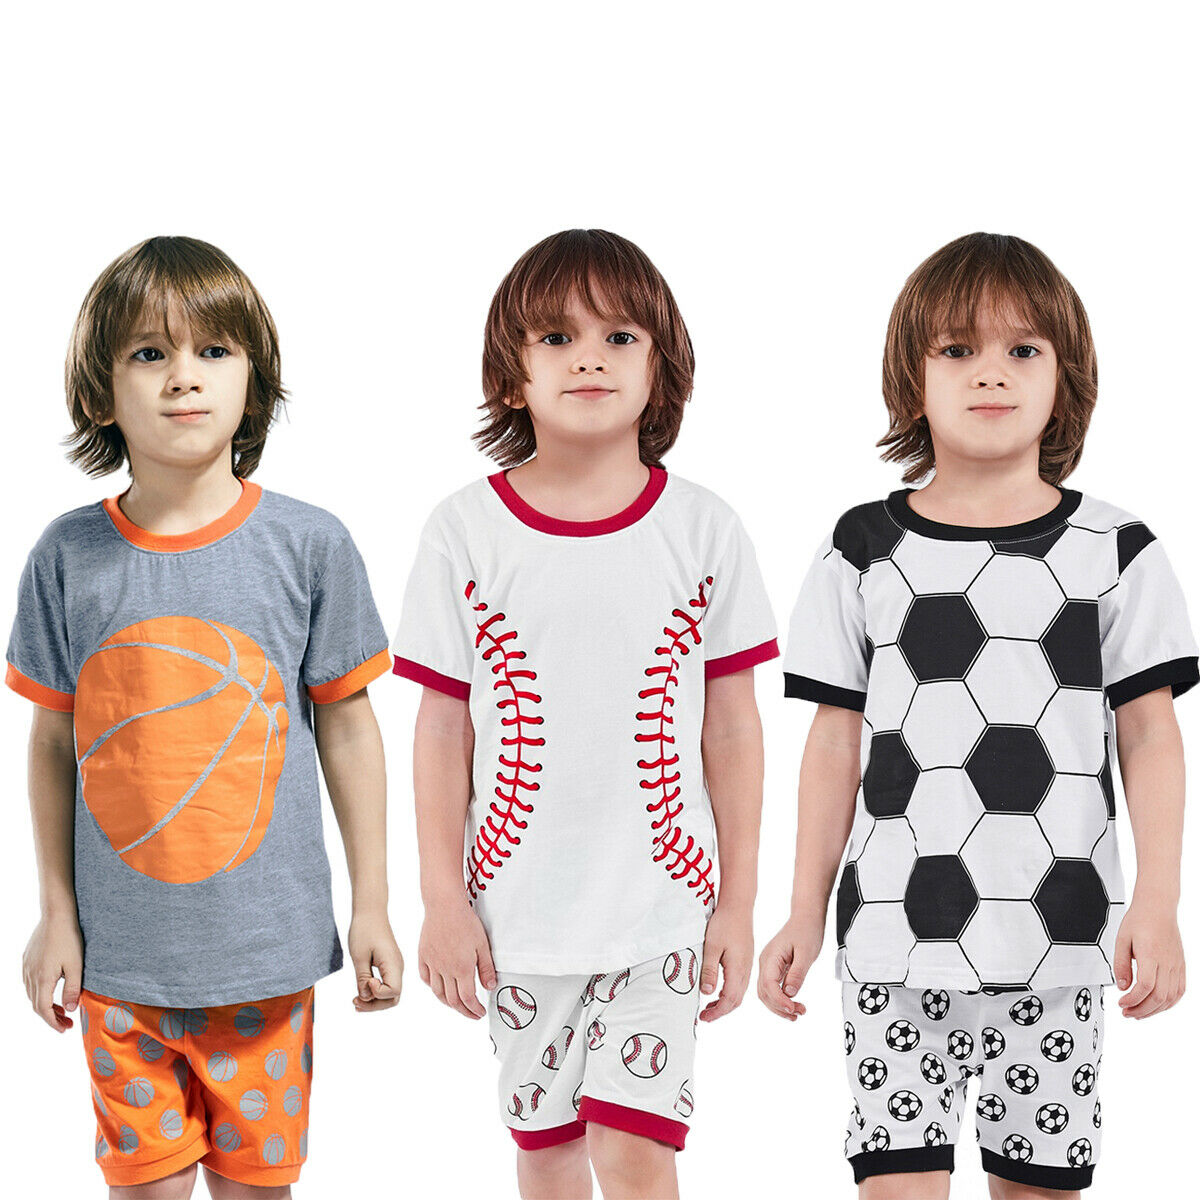 Boys Sleepwear for Kids Toddler Basketball Pajama Child Cotton Short Clothes Set